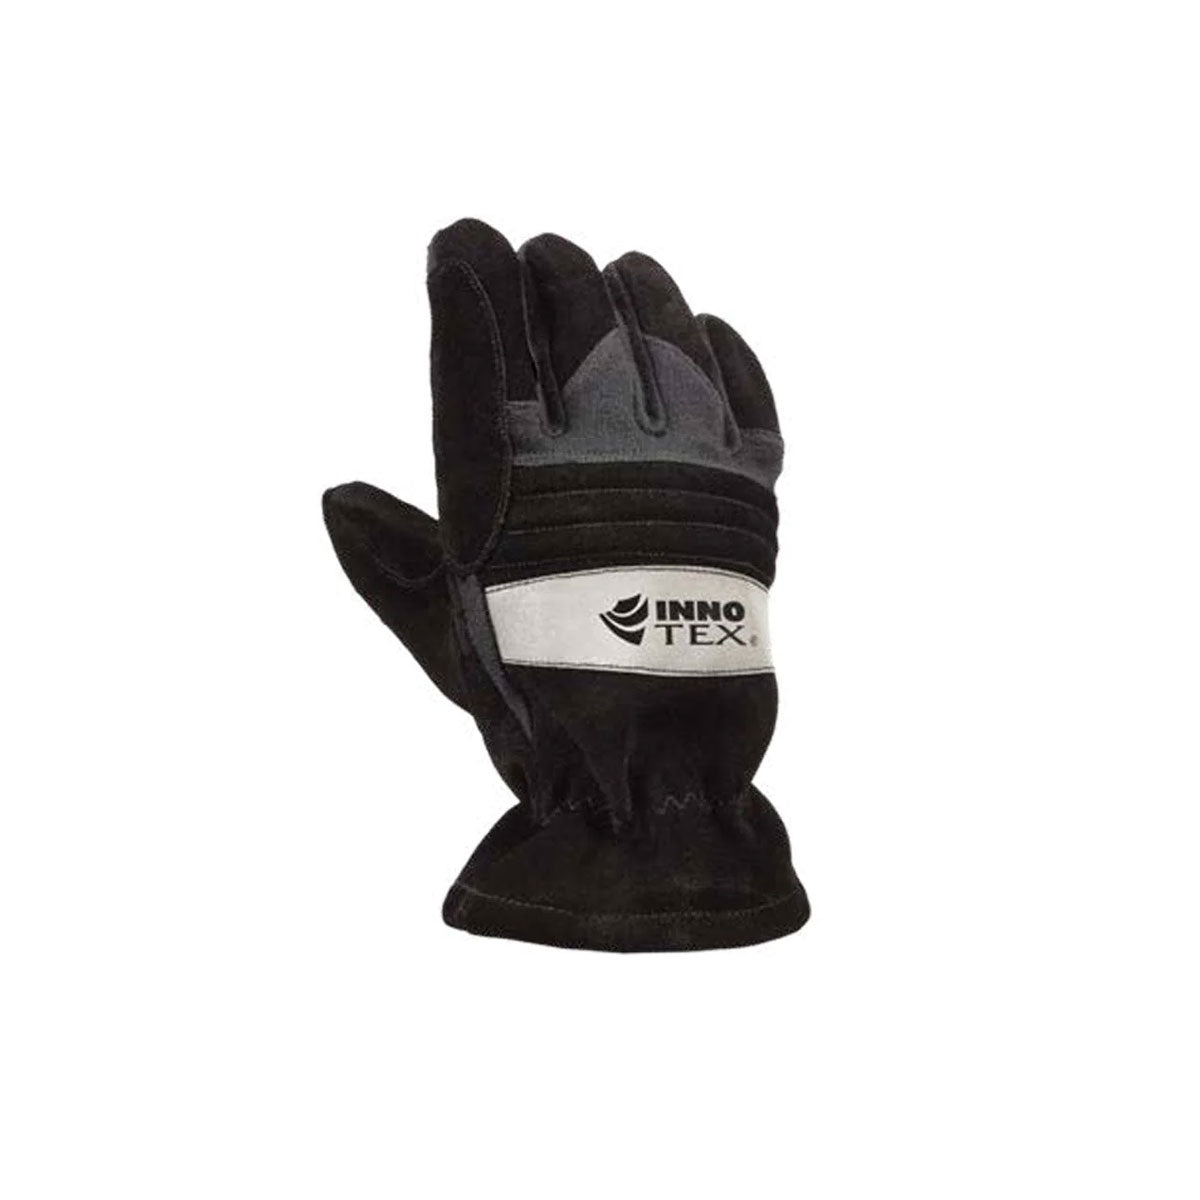 Glove Firefighting Vesatmax Black Eversoft Split Cowhide Shell and Kevlar Knit Knuckle Padding Nomex Gauntlet Size X-Large